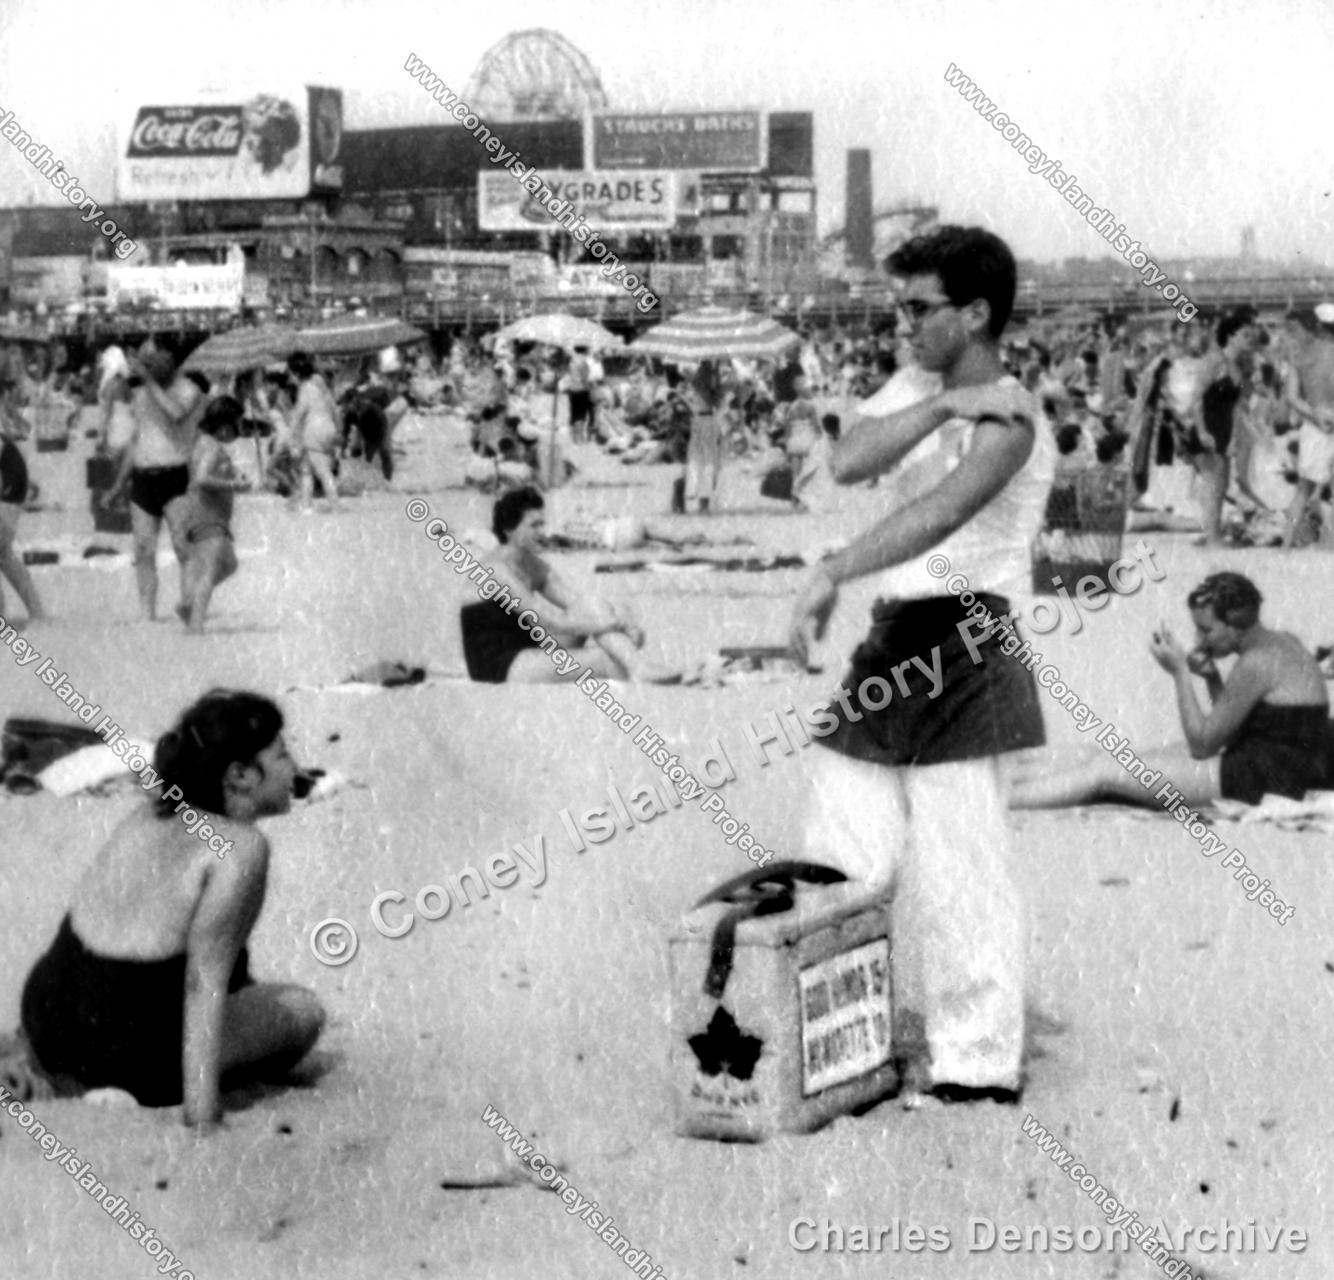 Ask Mr Coney Island Coney Island History Project